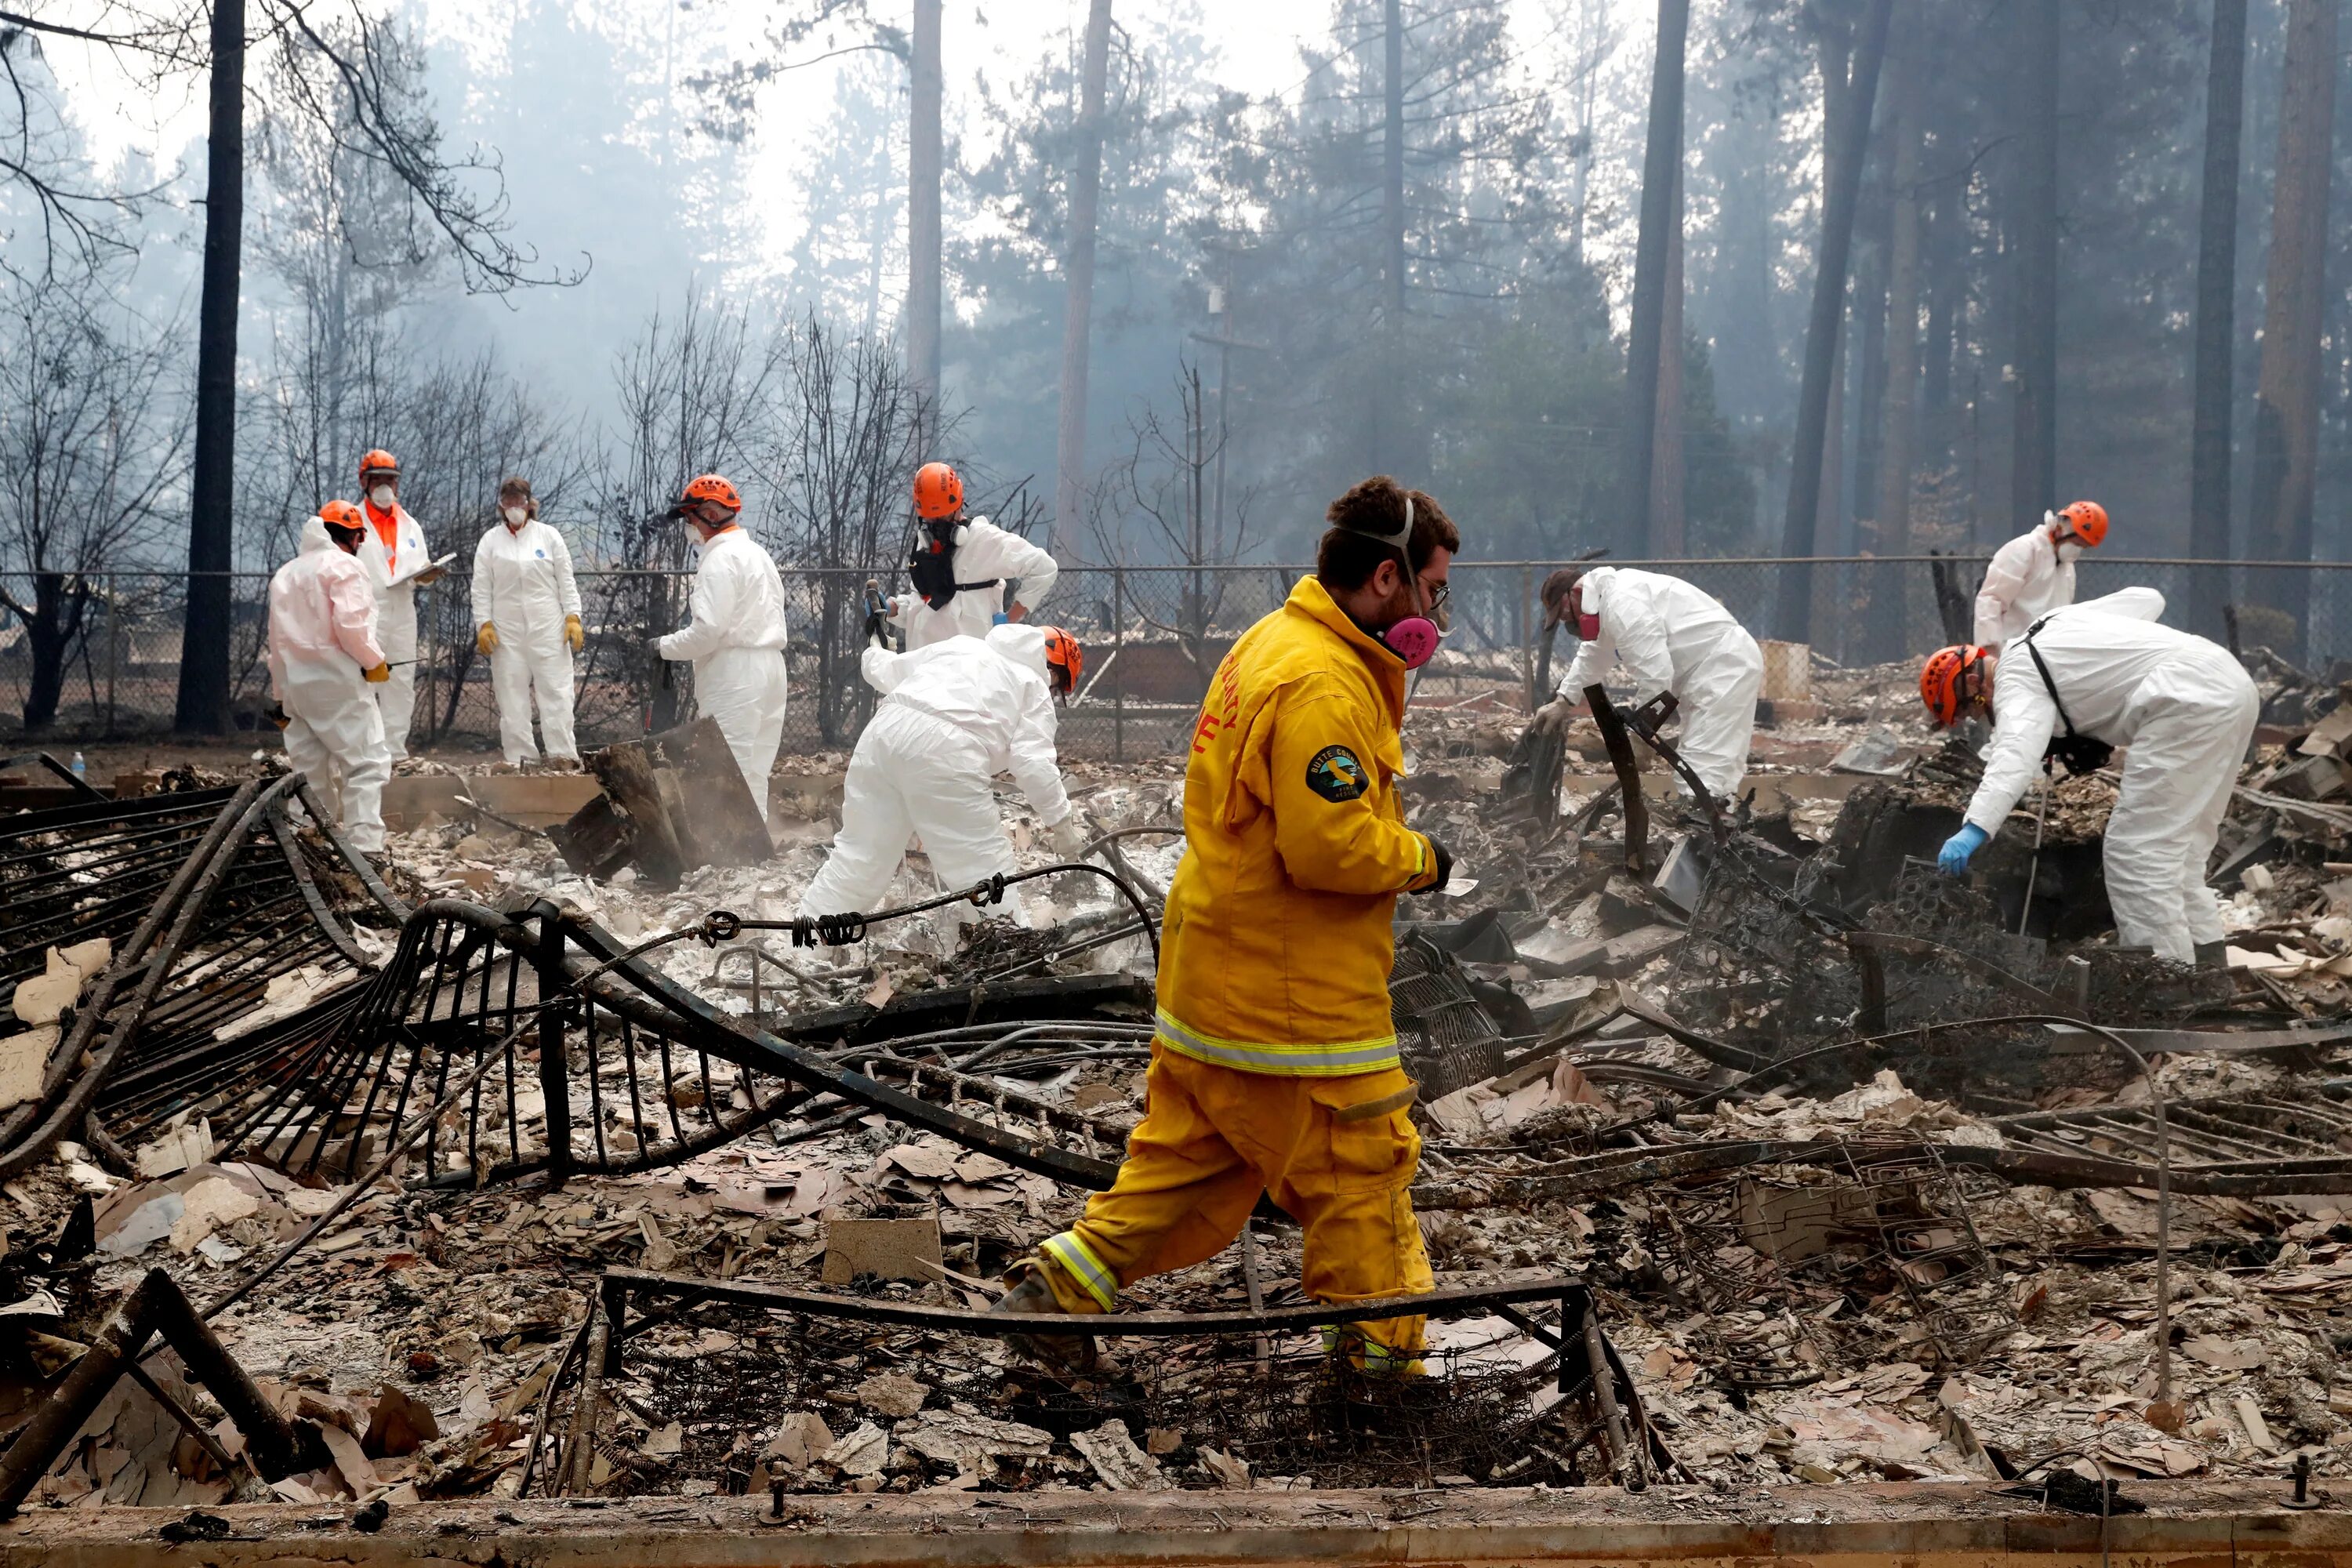 Последствия лесных пожаров. Последствия после пожара. Последствия пожаров лесов. Почему после пожаров